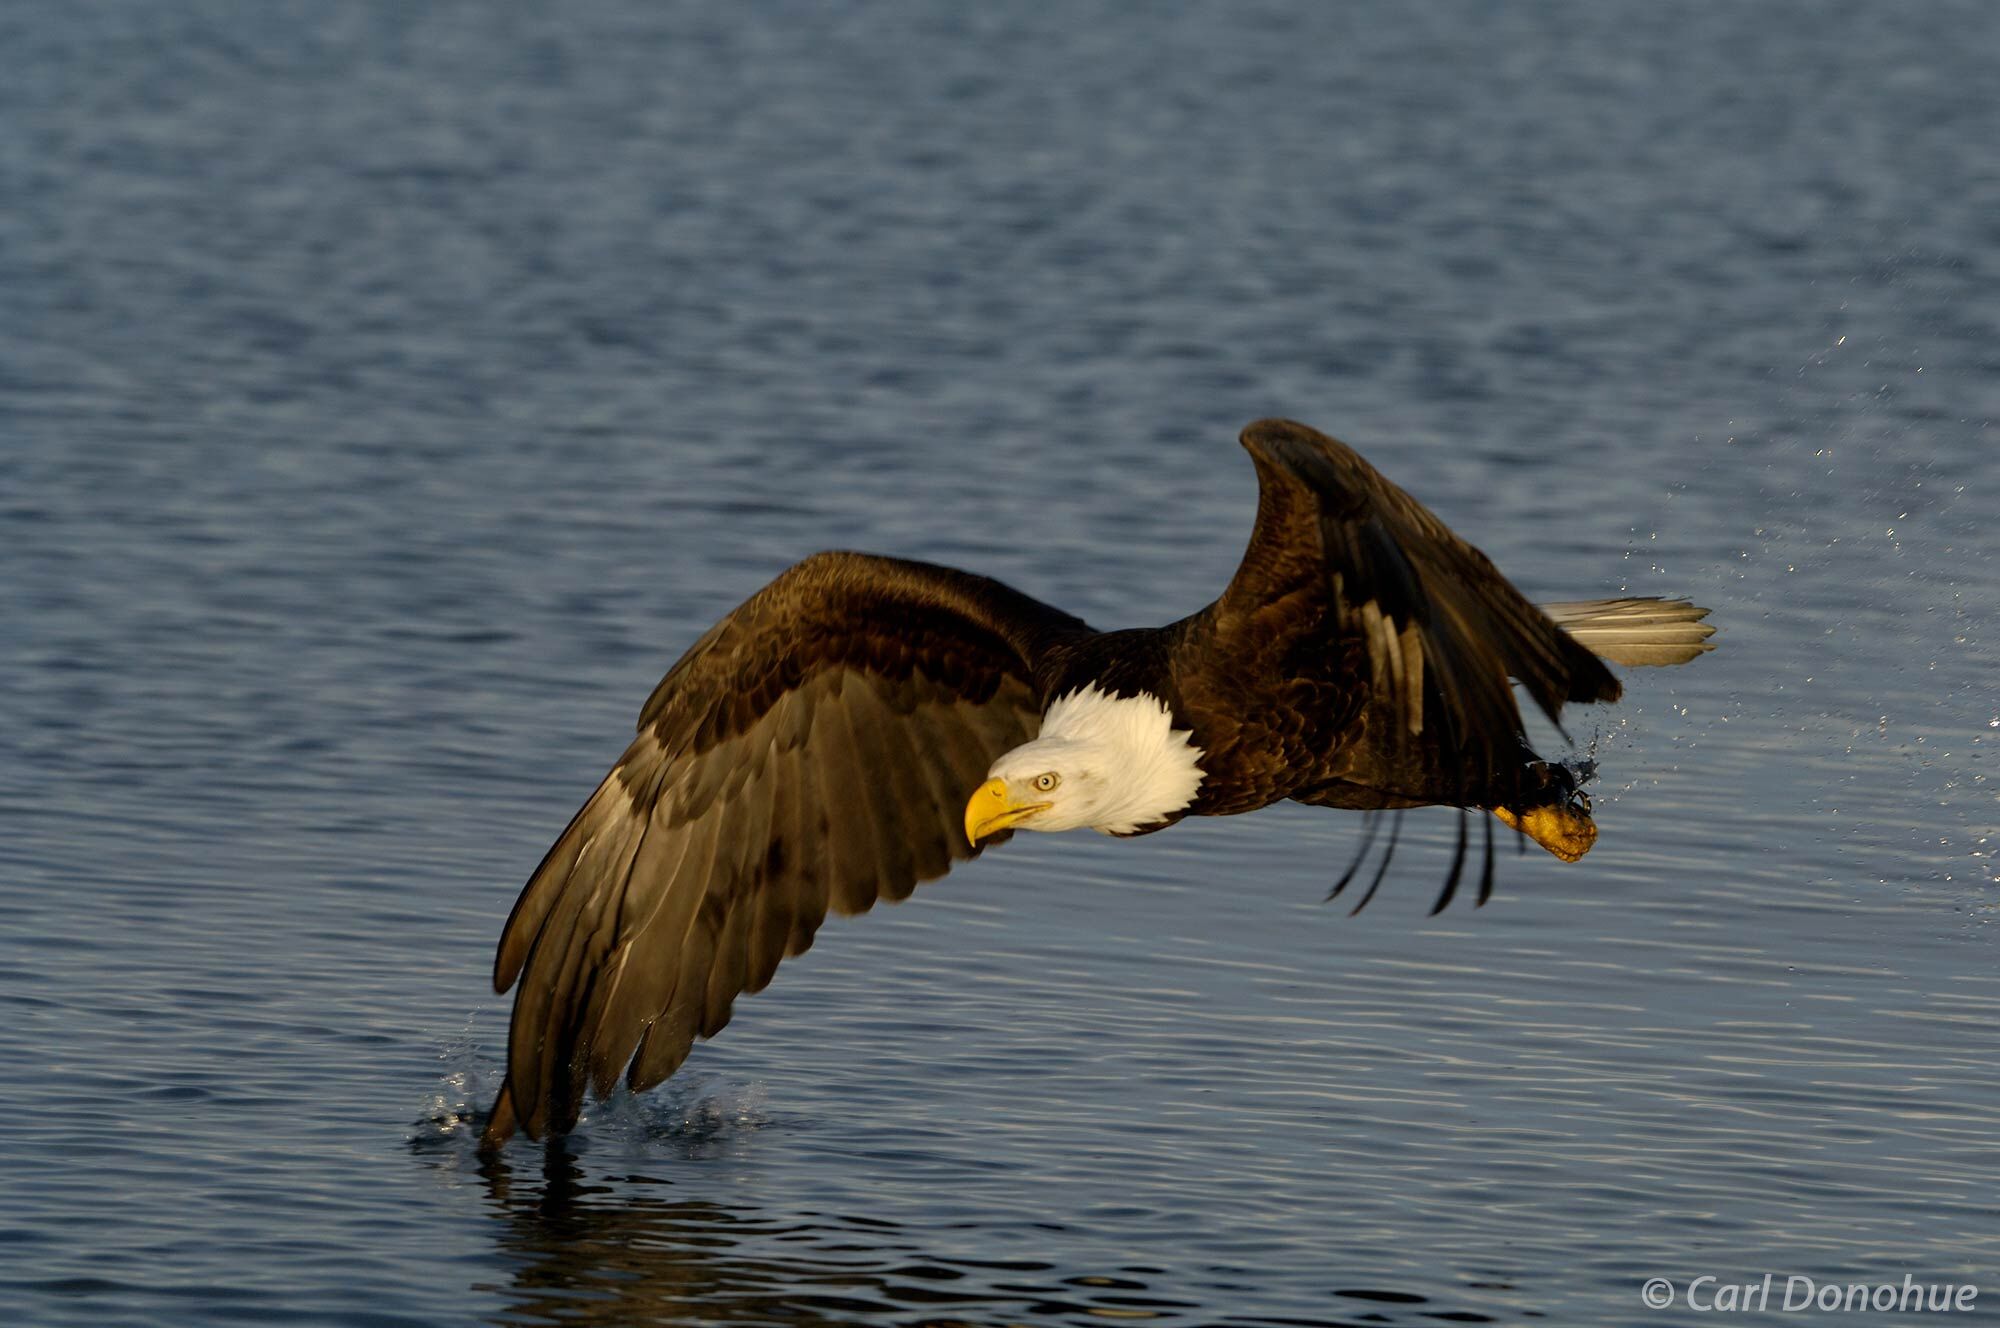 The bald eagle surveys the water for its next meal in Kachemak Bay, Alaska. Bald eagle fishing in Kachemak Bay, near Homer, Alaska...